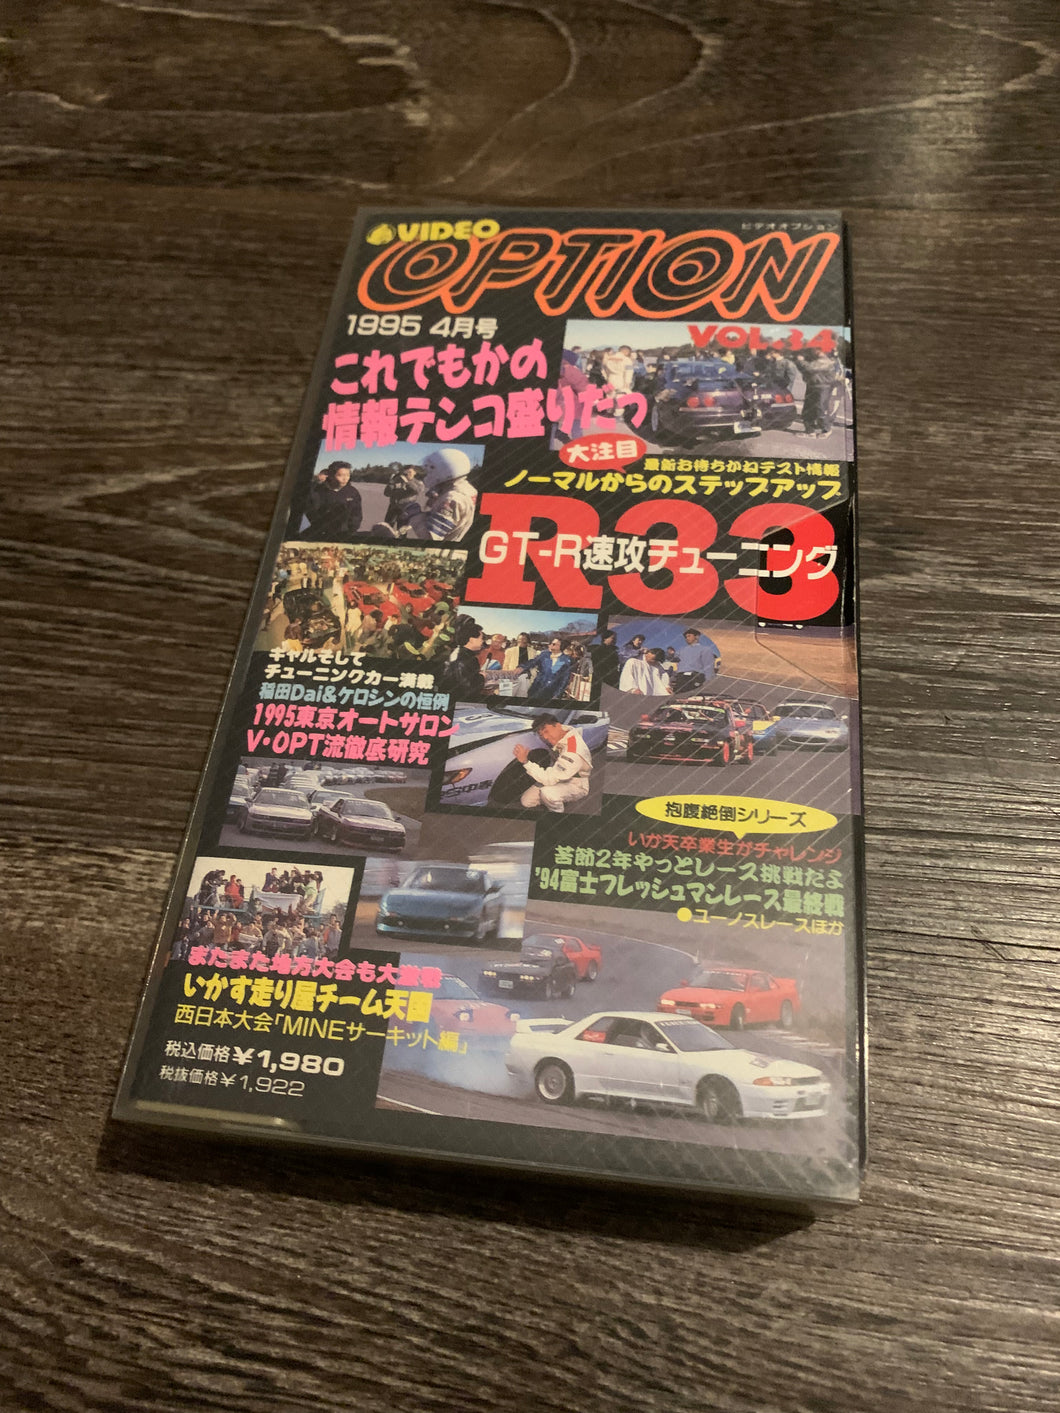 Option VHS Apr. 1995 Volume 34